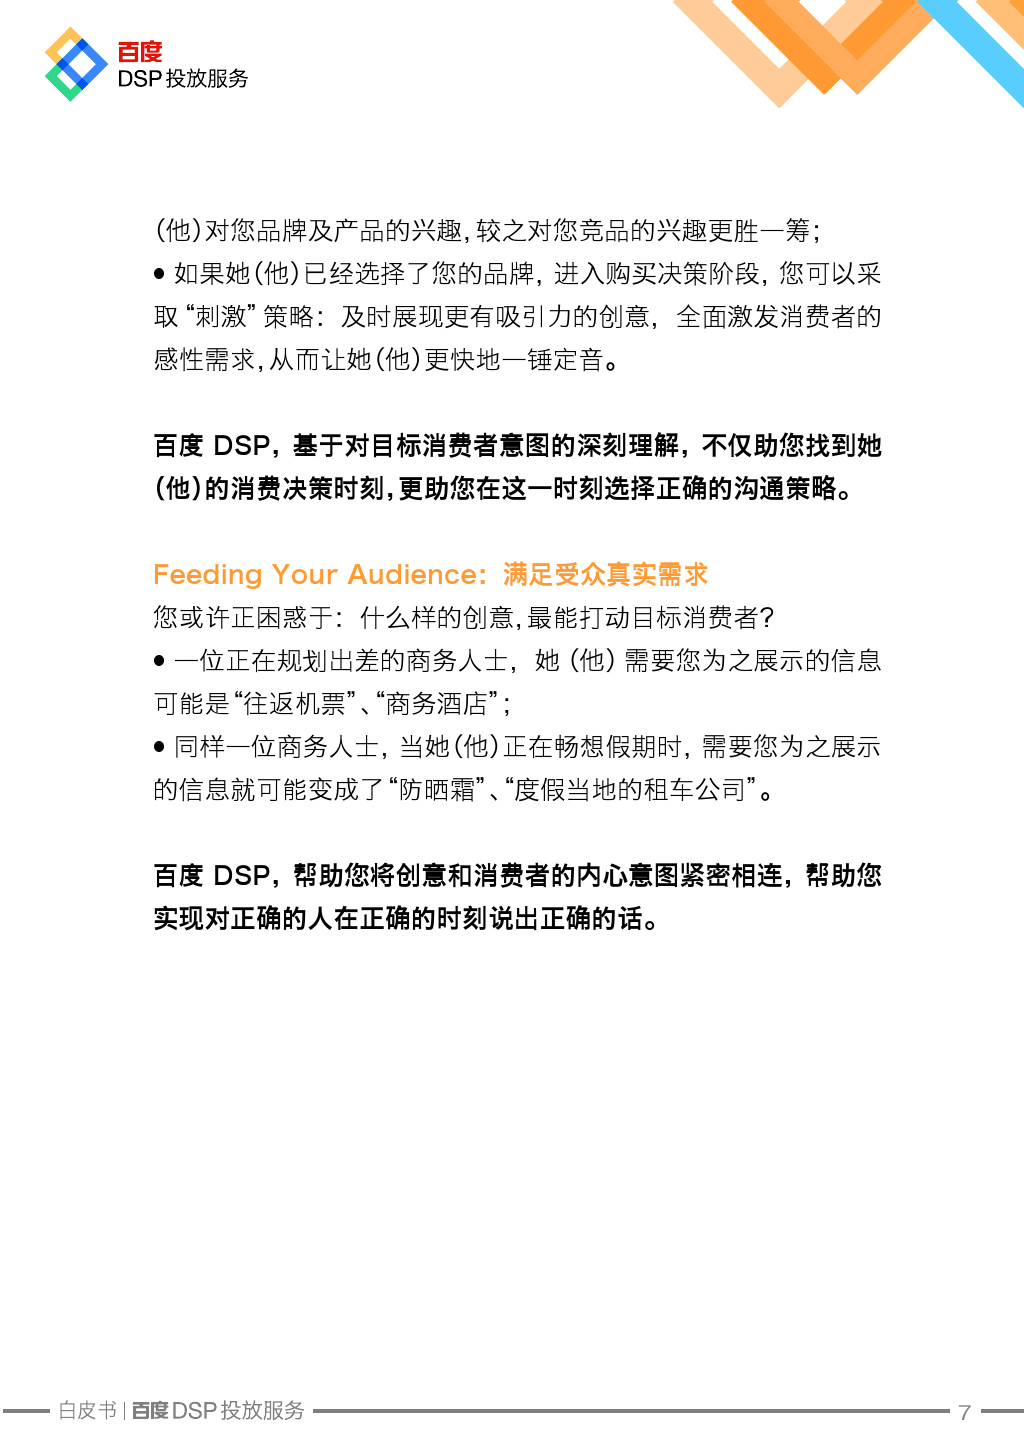 Baidu DSP Service White Paper_000008